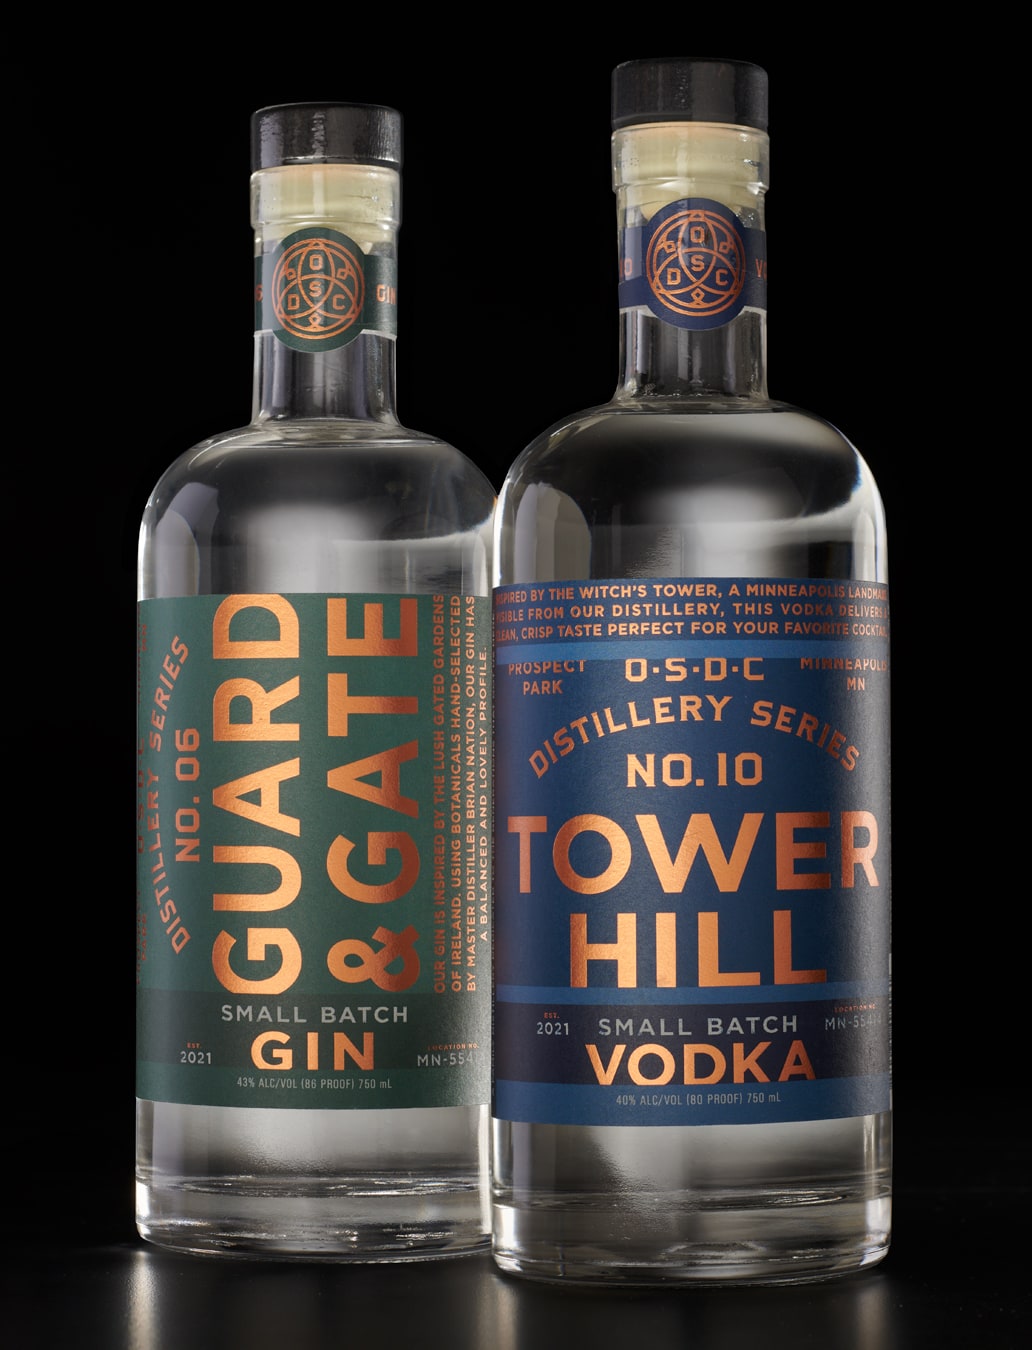 O’Shaughnessy Distilling Co. bottle designs bottles Guard & Gate Gin Tower Hill Vodka